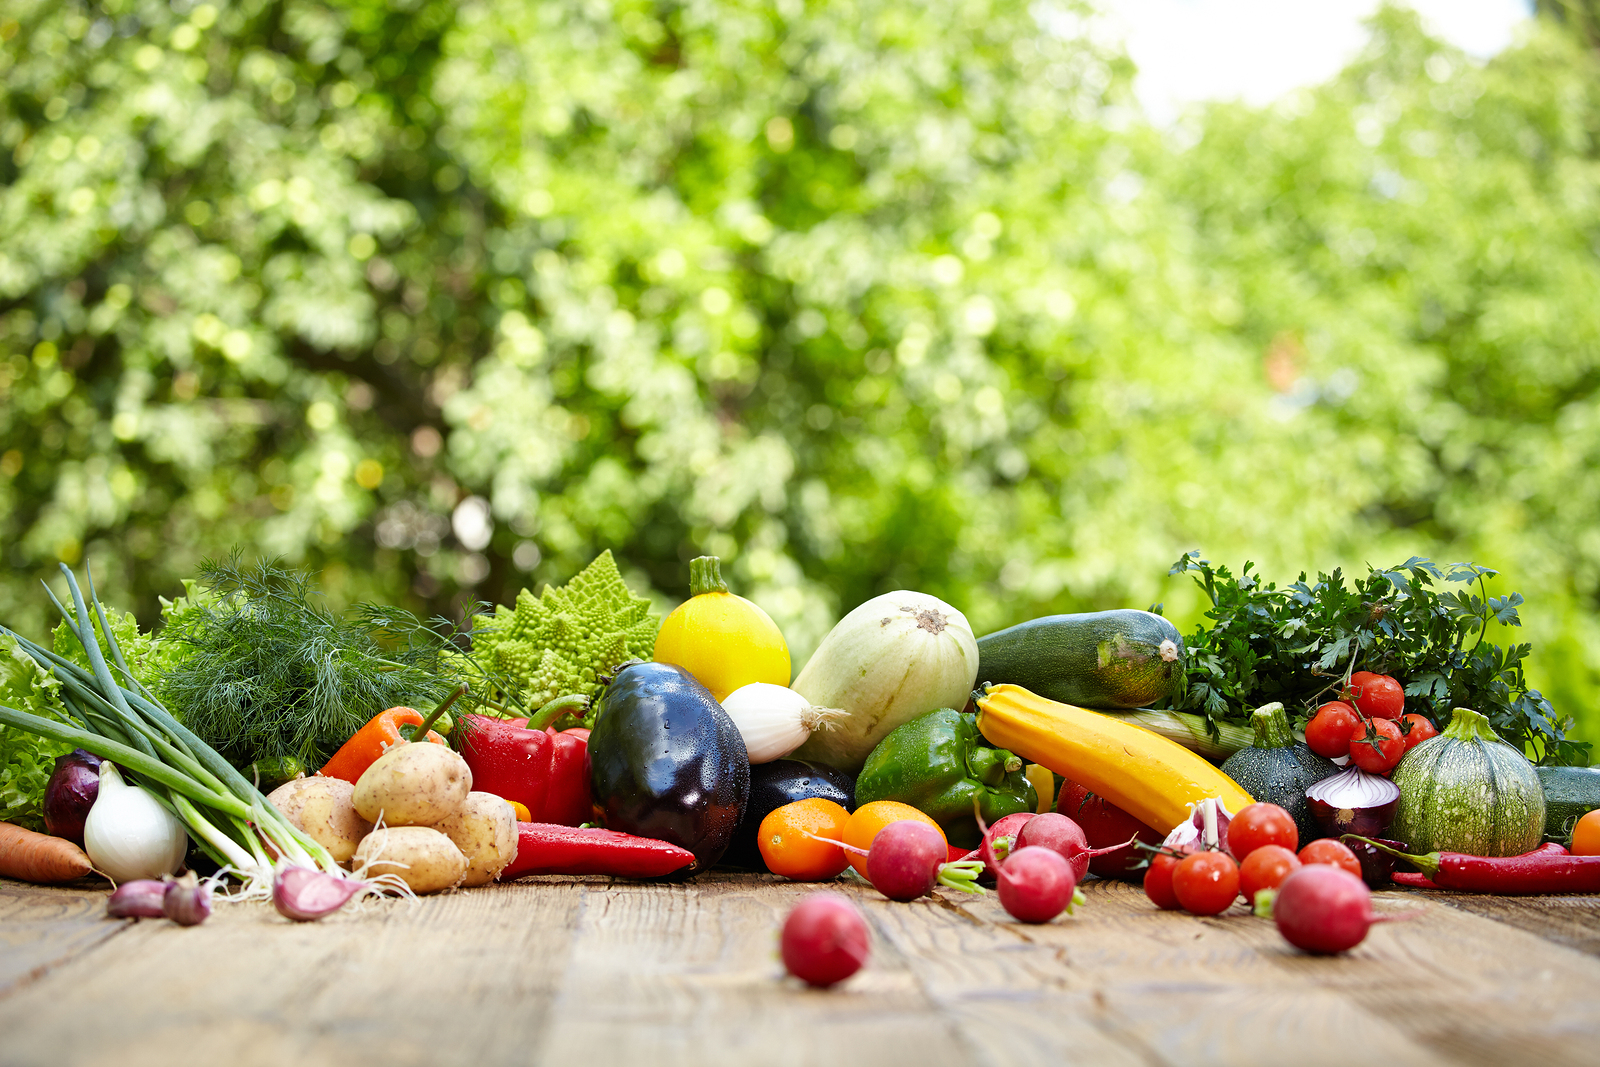 https://blog.fillyourplate.org/wp-content/uploads/2015/06/bigstock-Fresh-organic-vegetables-ane-f-68352535.jpg